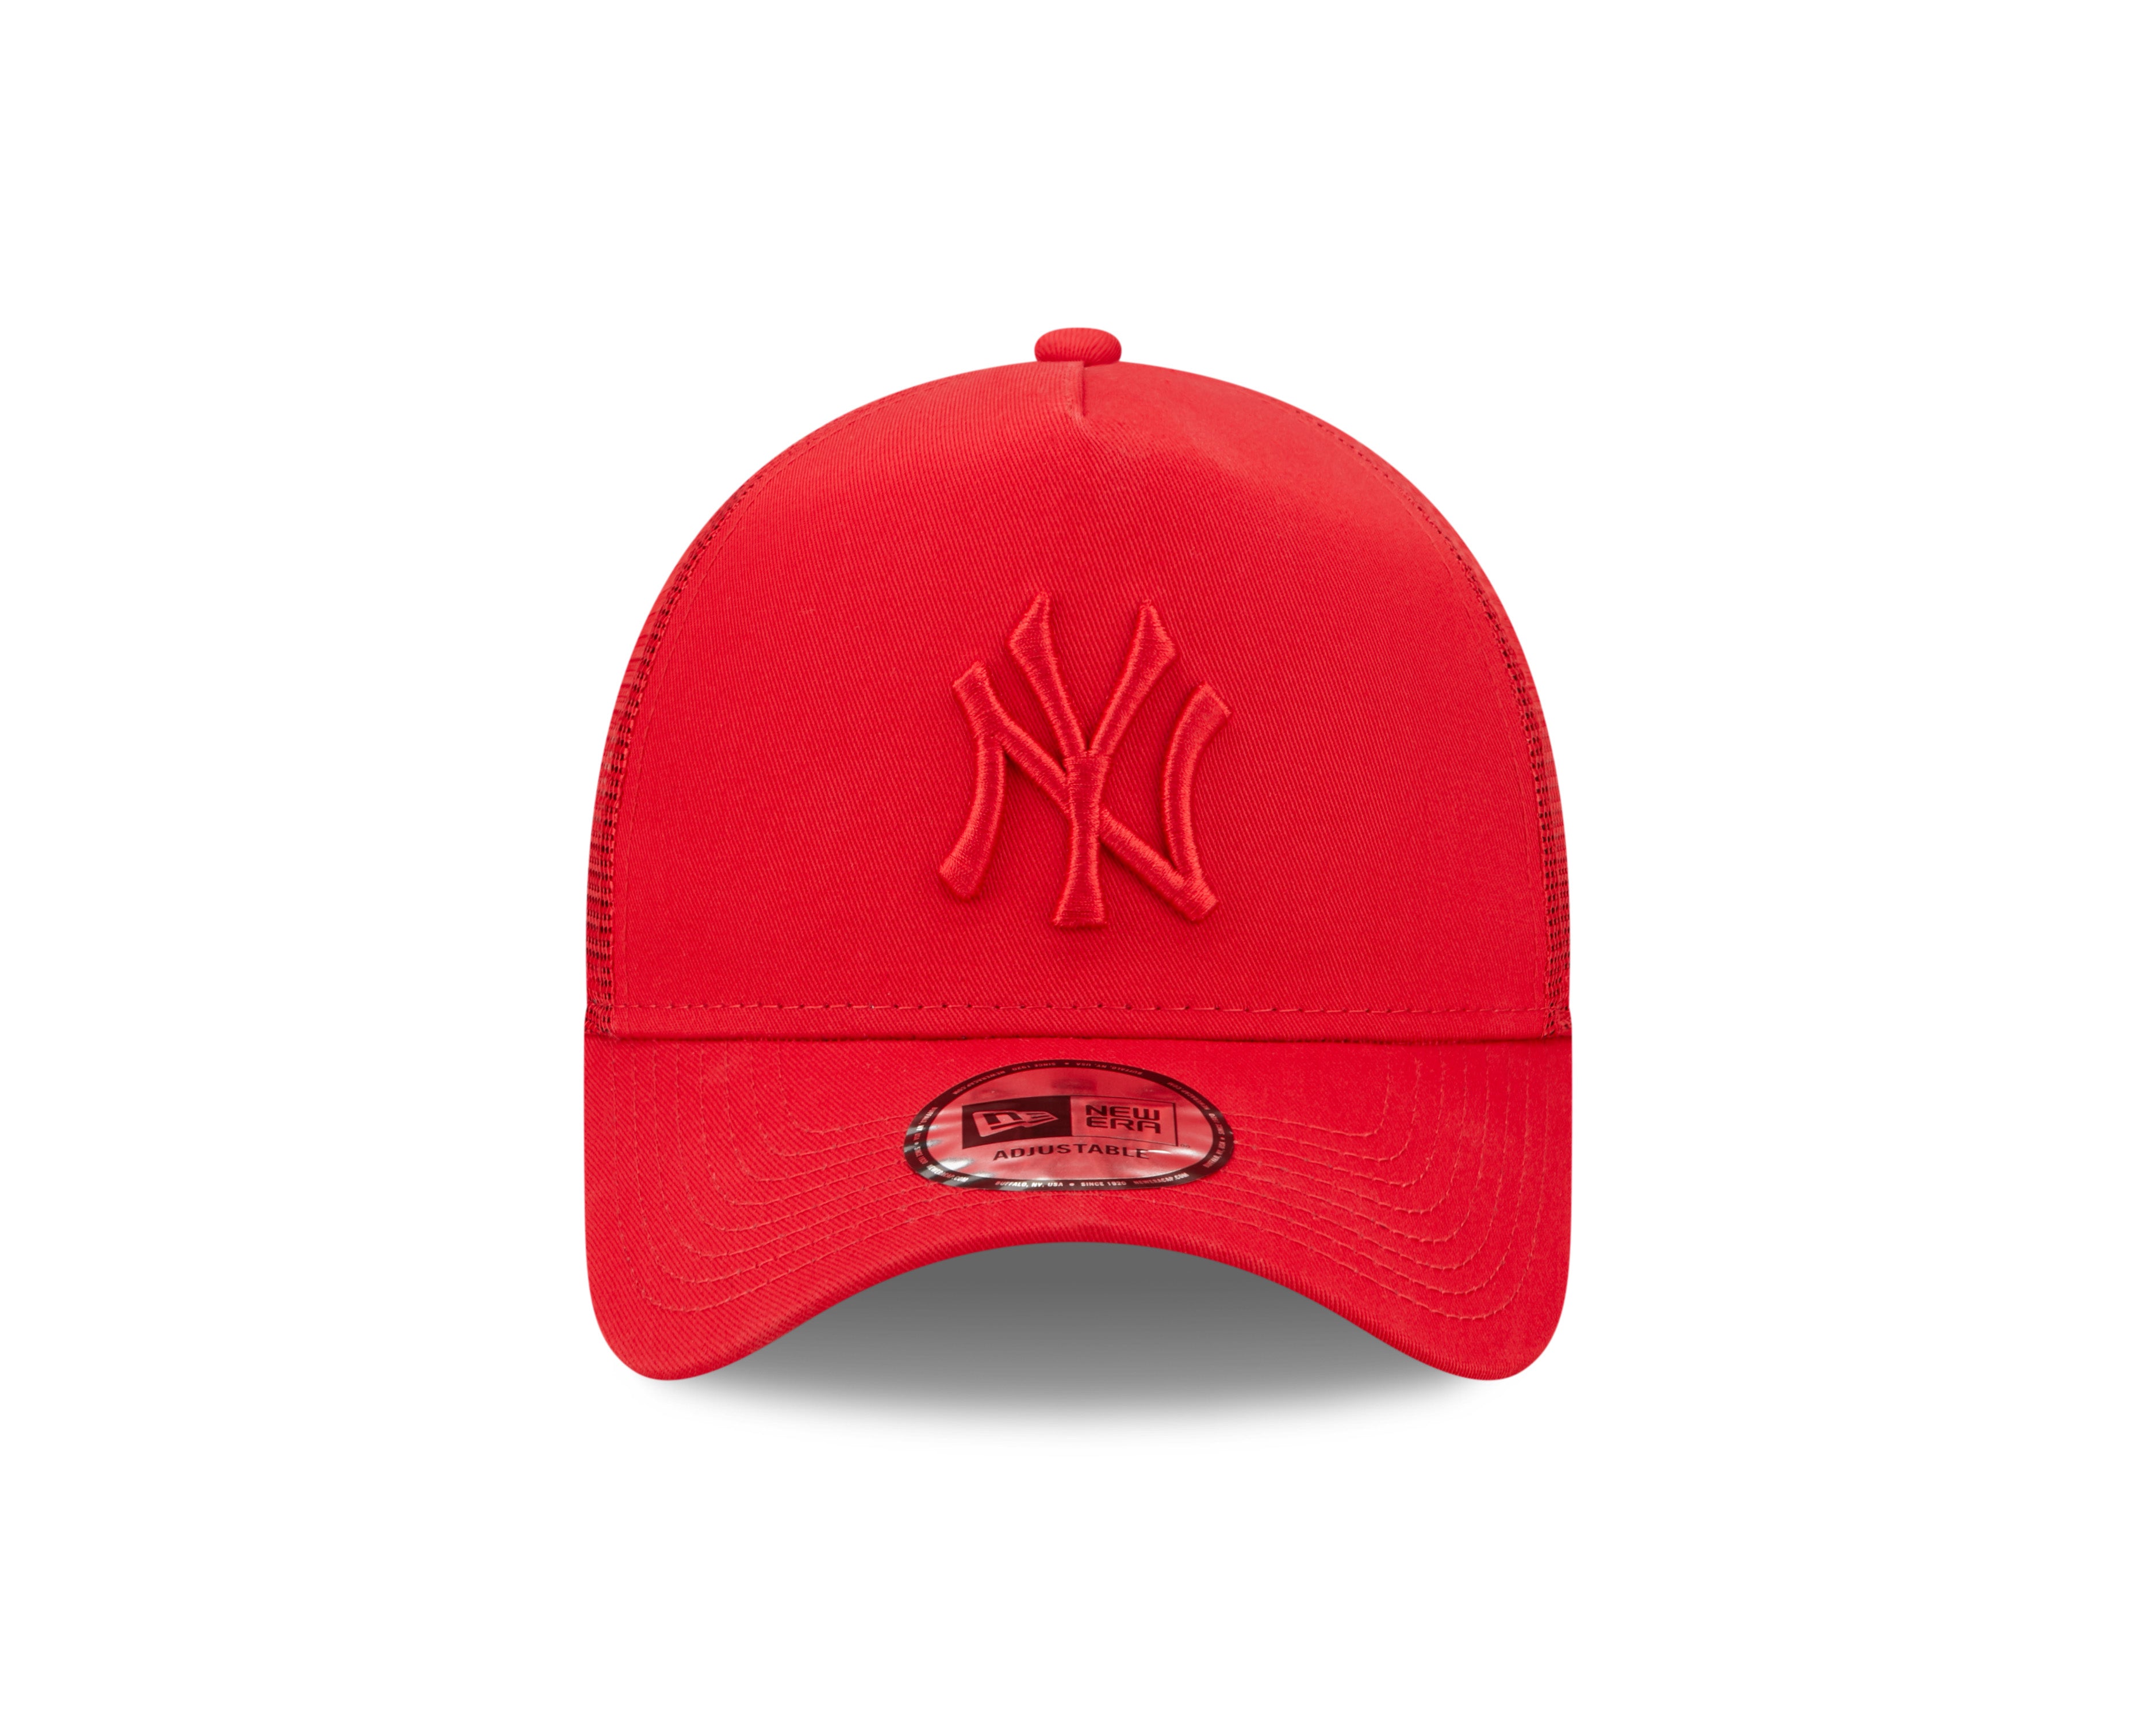 Tonal Mesh Trucker Cap New York Yankees - Scarlet/Scarlet - Headz Up 